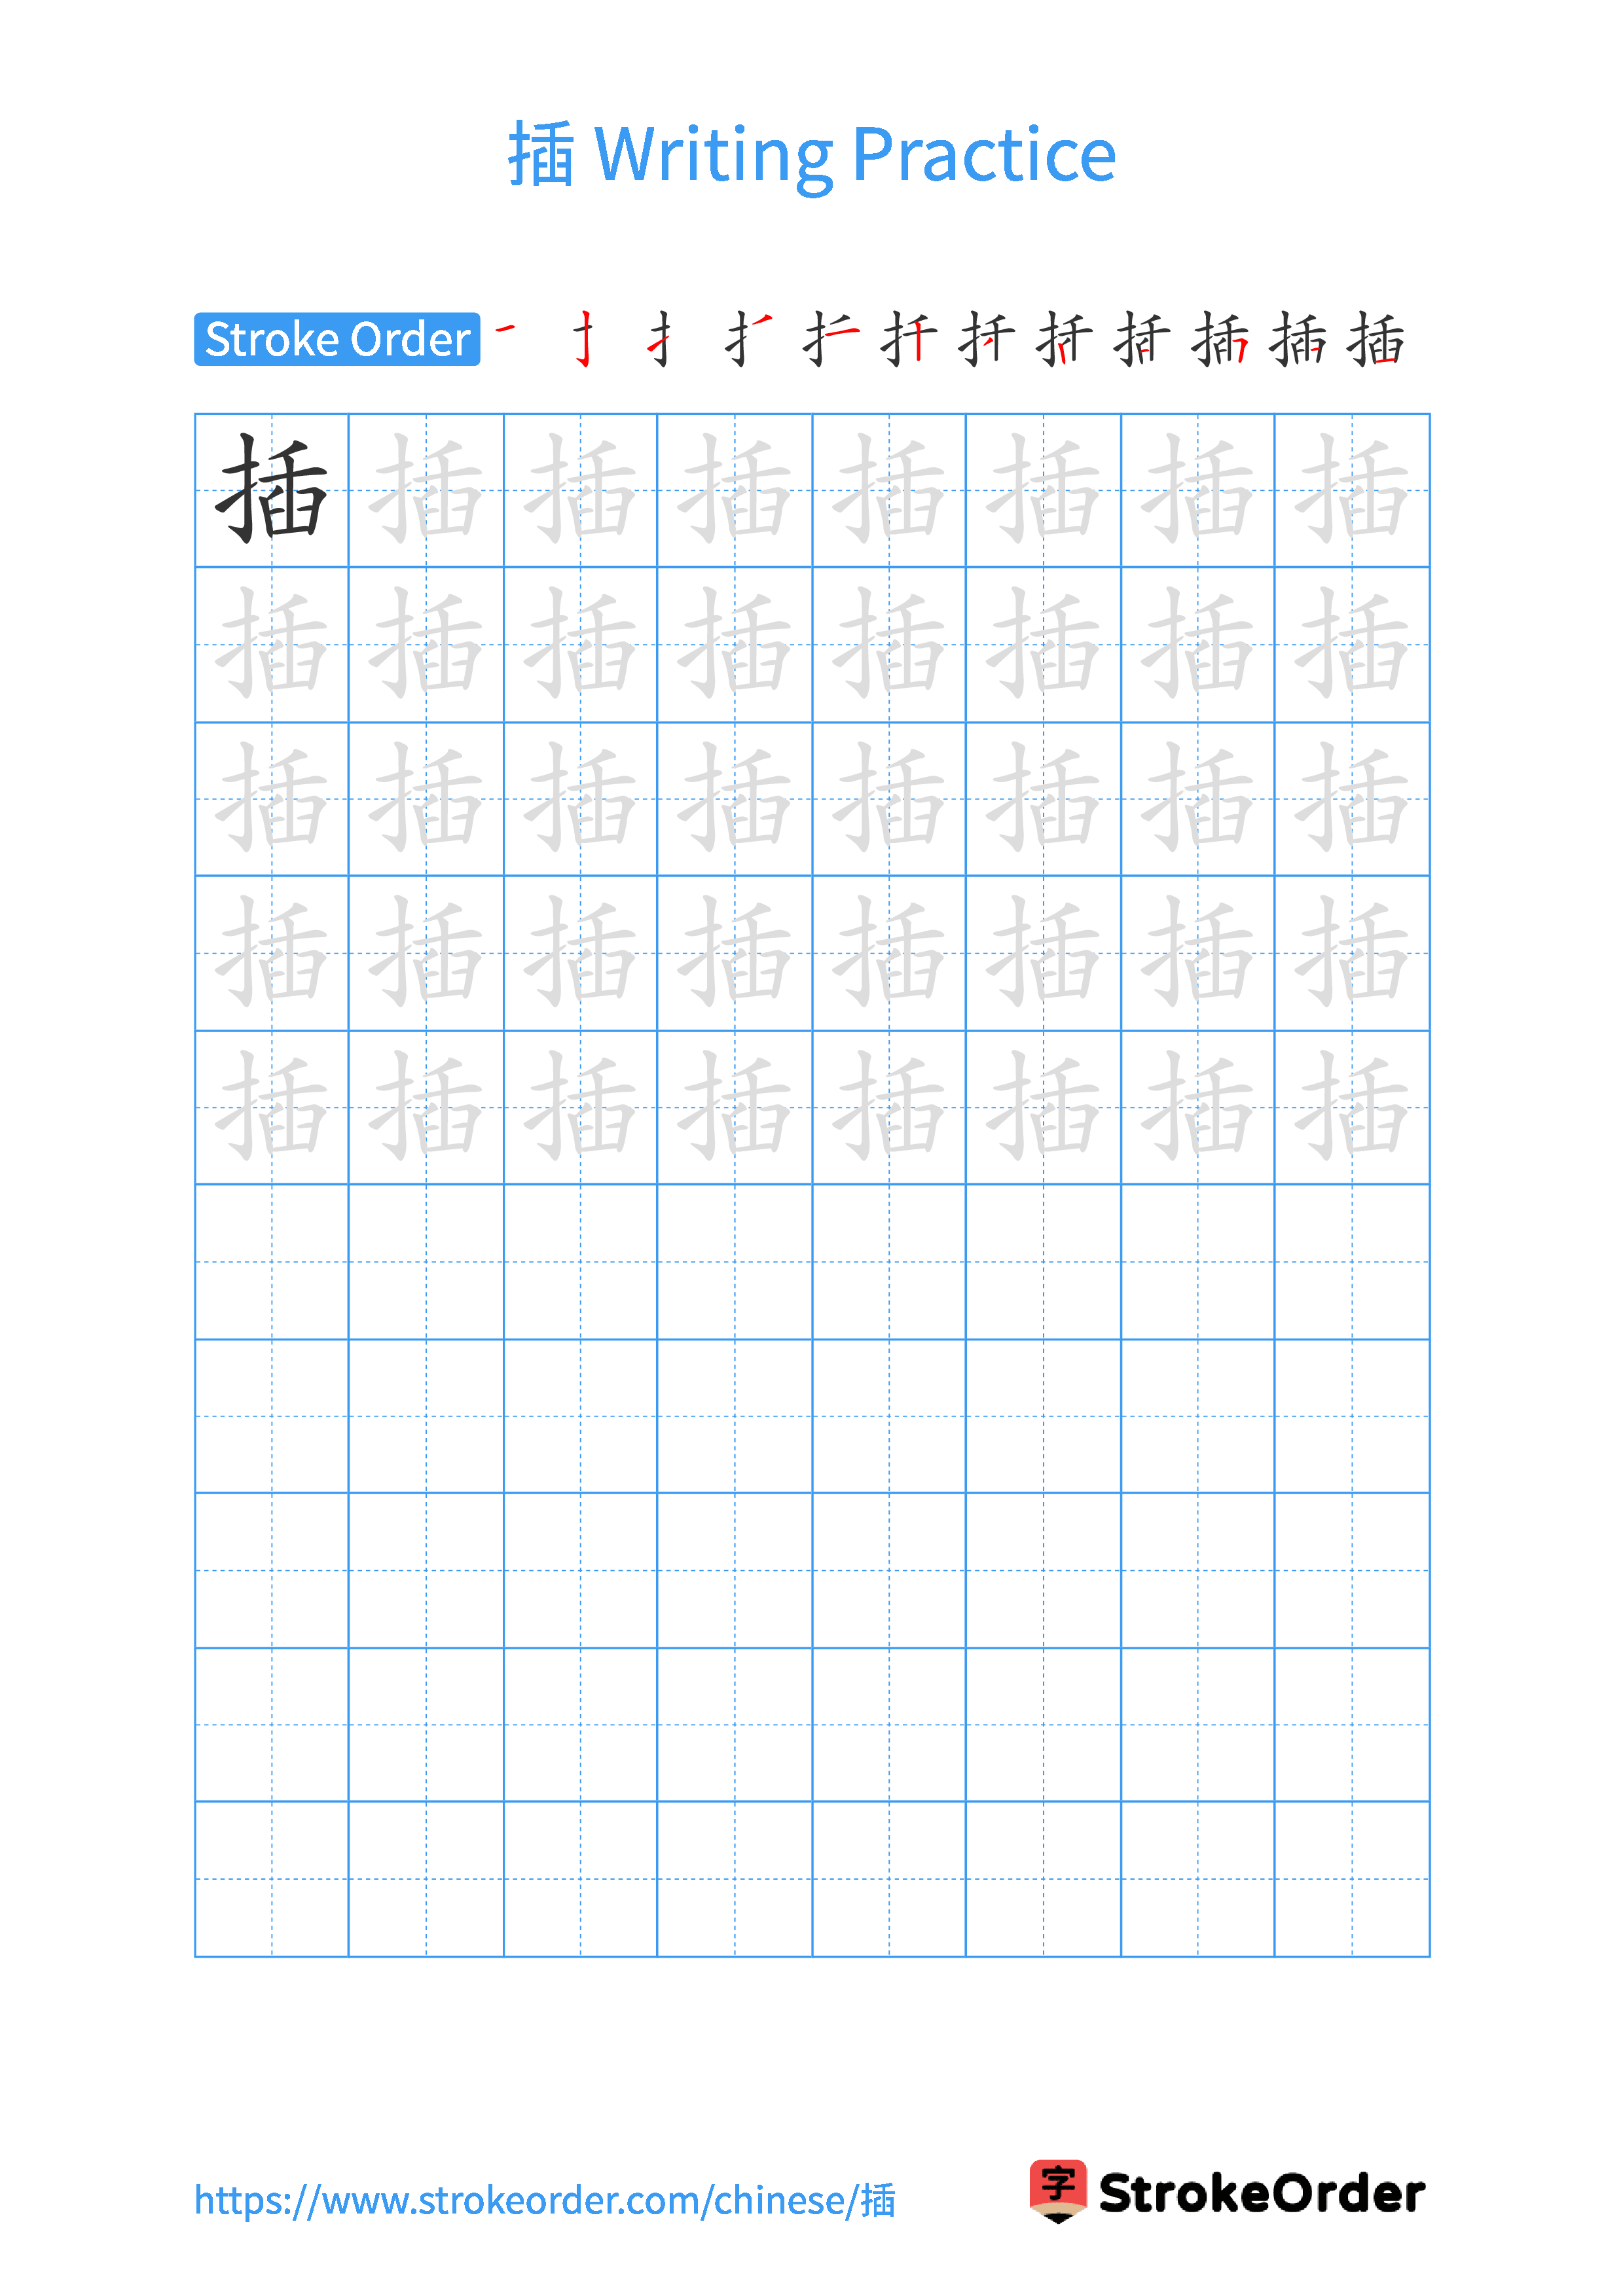 Printable Handwriting Practice Worksheet of the Chinese character 插 in Portrait Orientation (Tian Zi Ge)